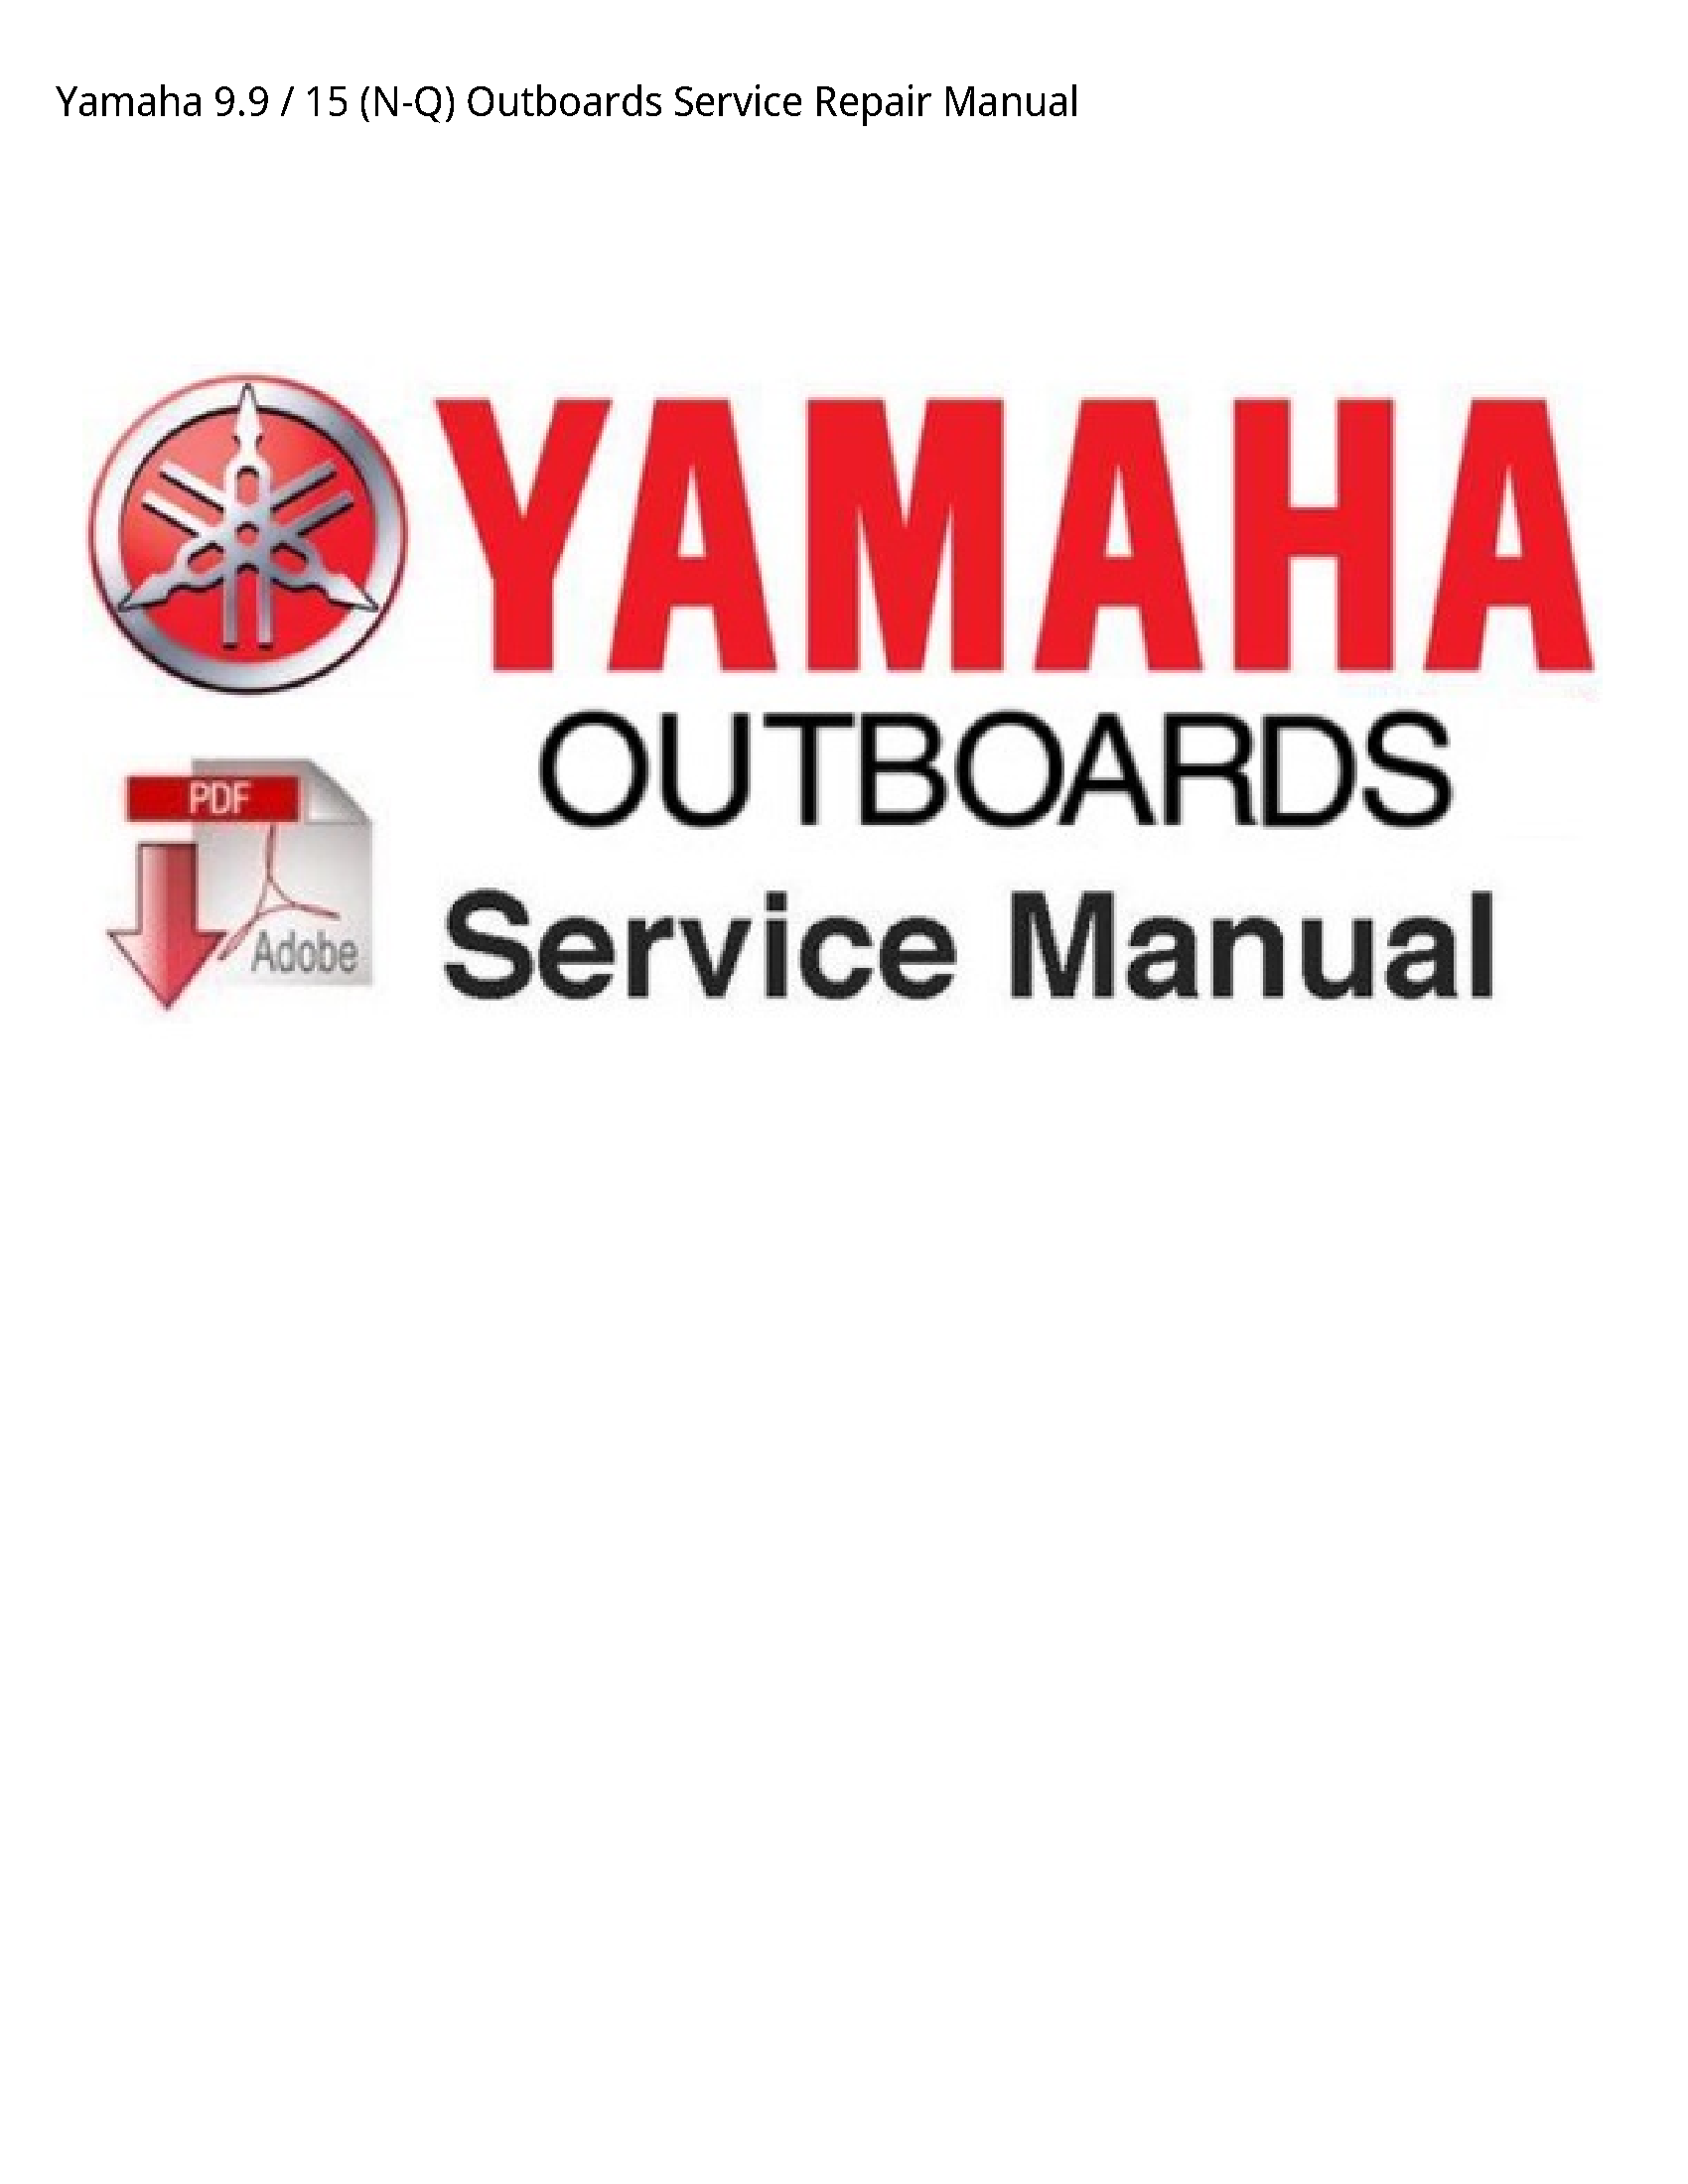 Yamaha 9.9 (N-Q) Outboards manual